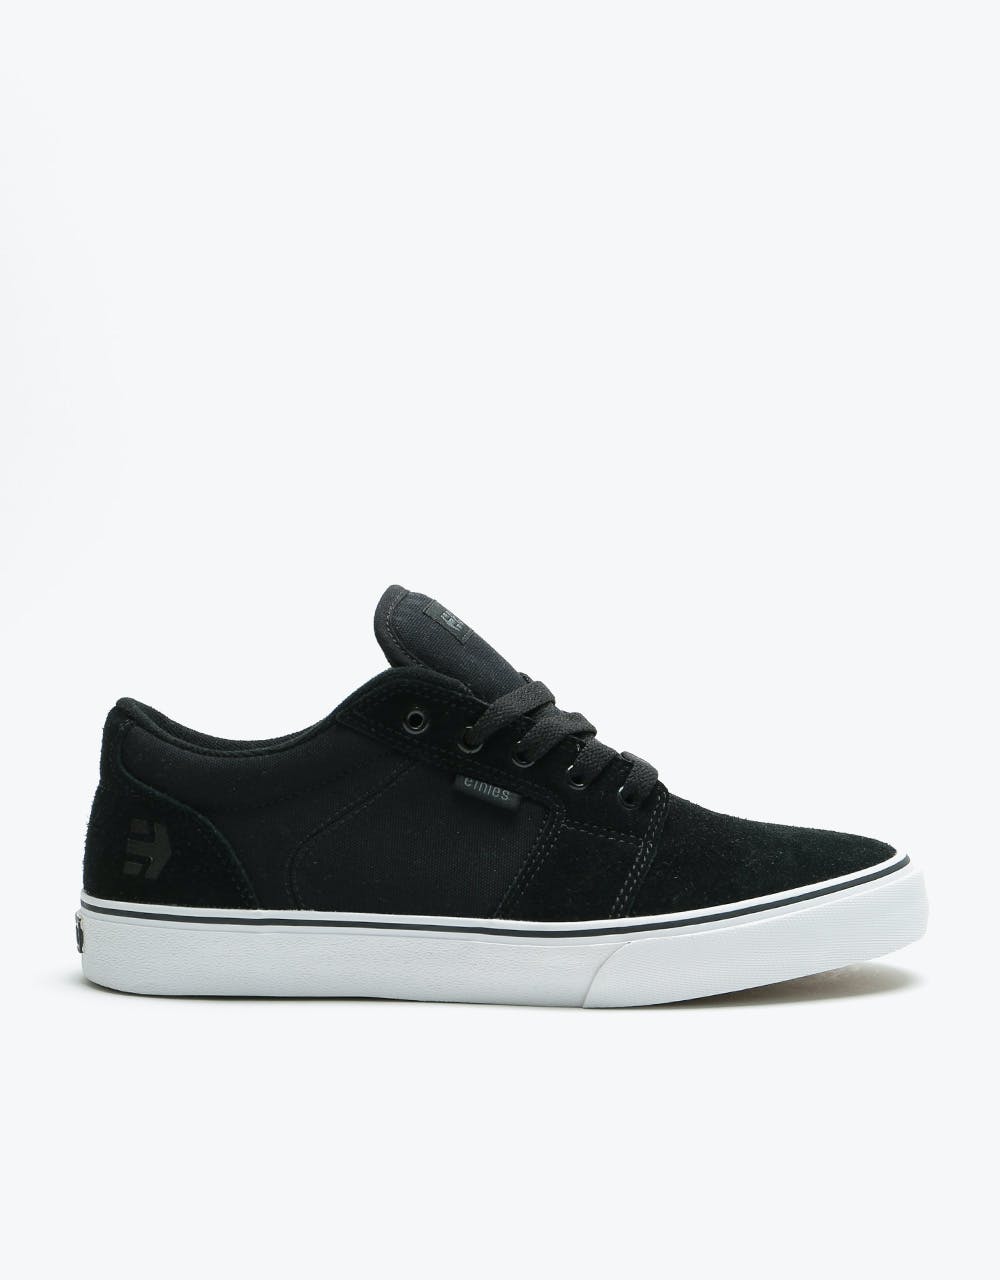 Etnies Barge LS Skate Shoes - Black/White/Black